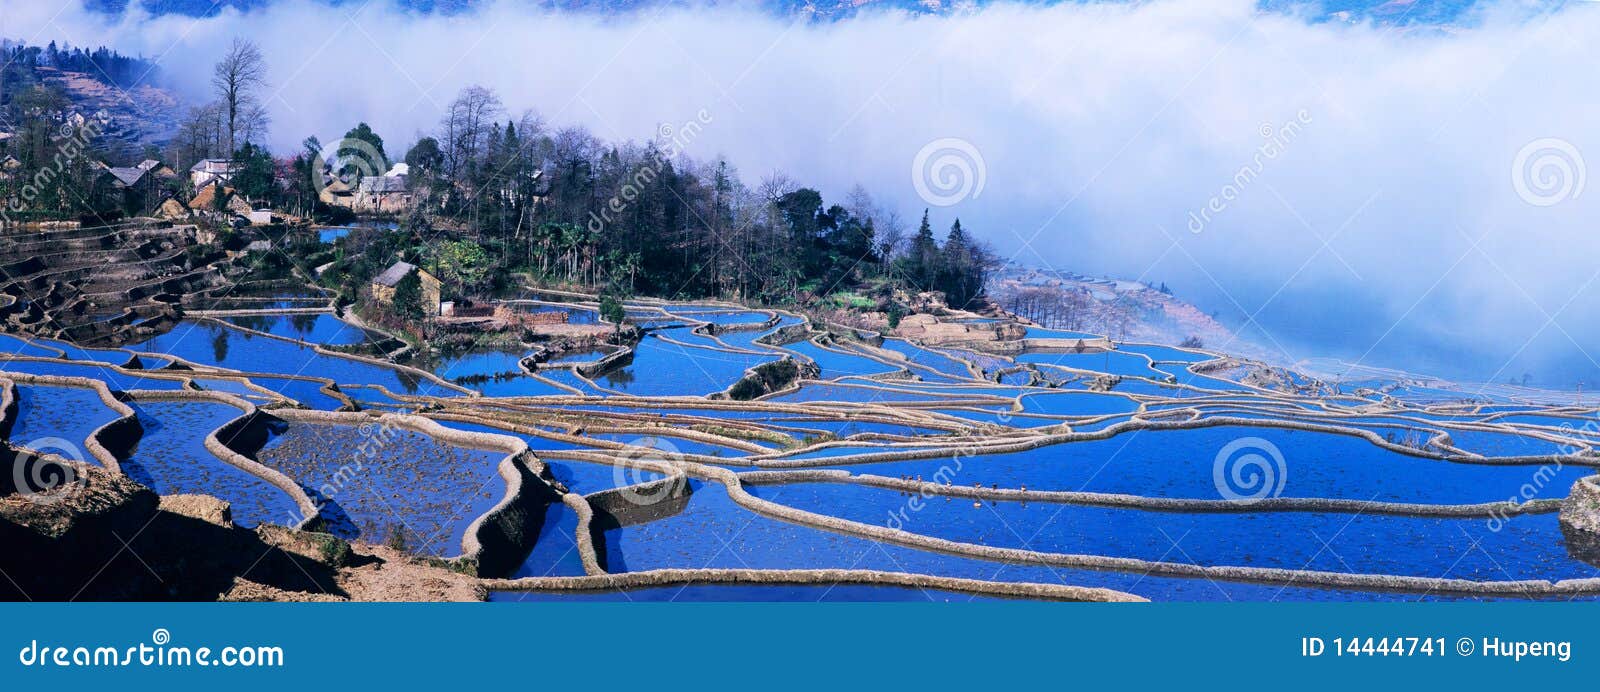 blue rice terraces panorama of yuanyang